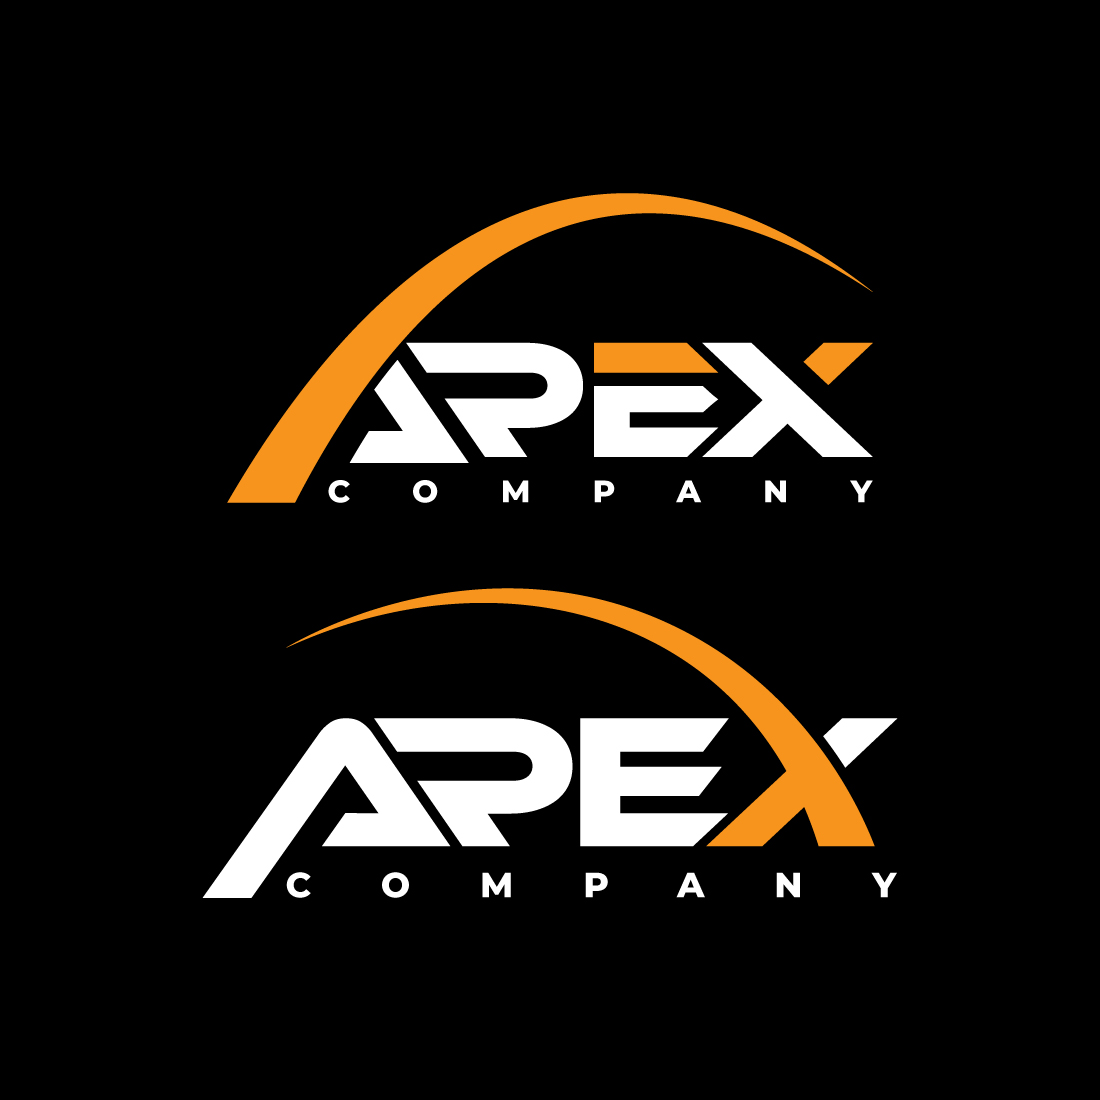 Apex creative letter branding logo design Concept cover image.